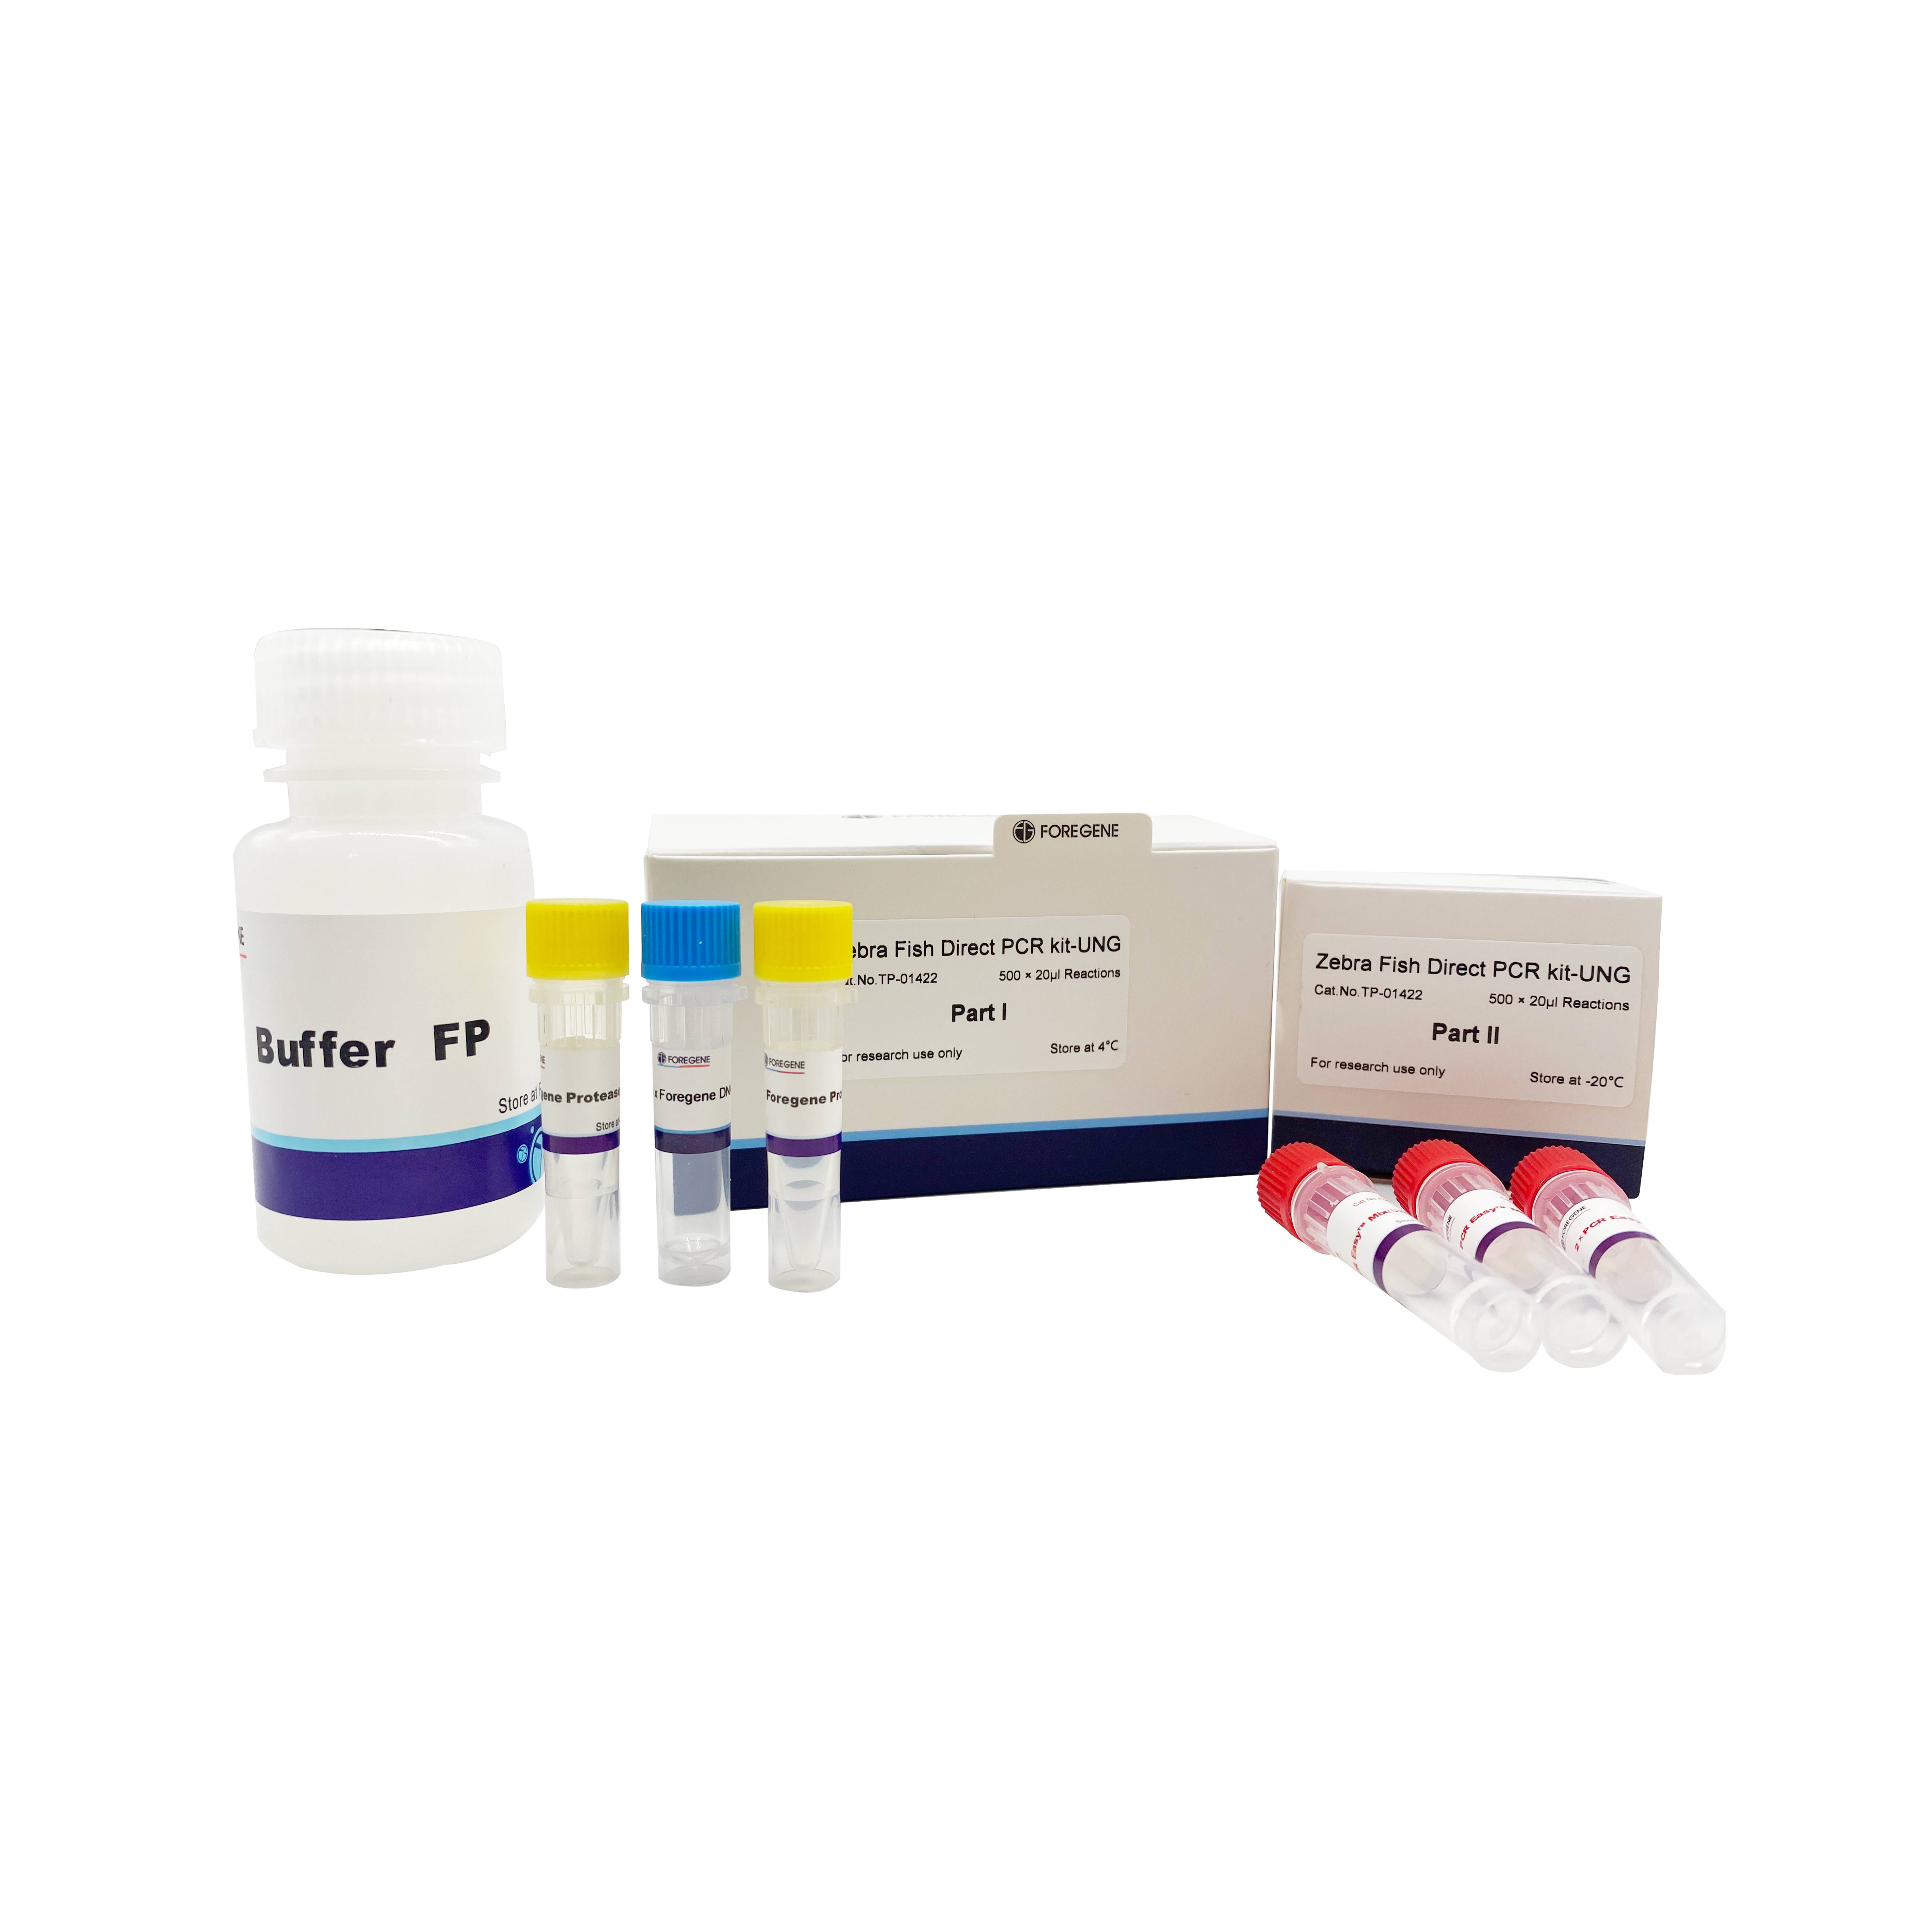 Iasg Zebra Direct PCR Kit-UNG